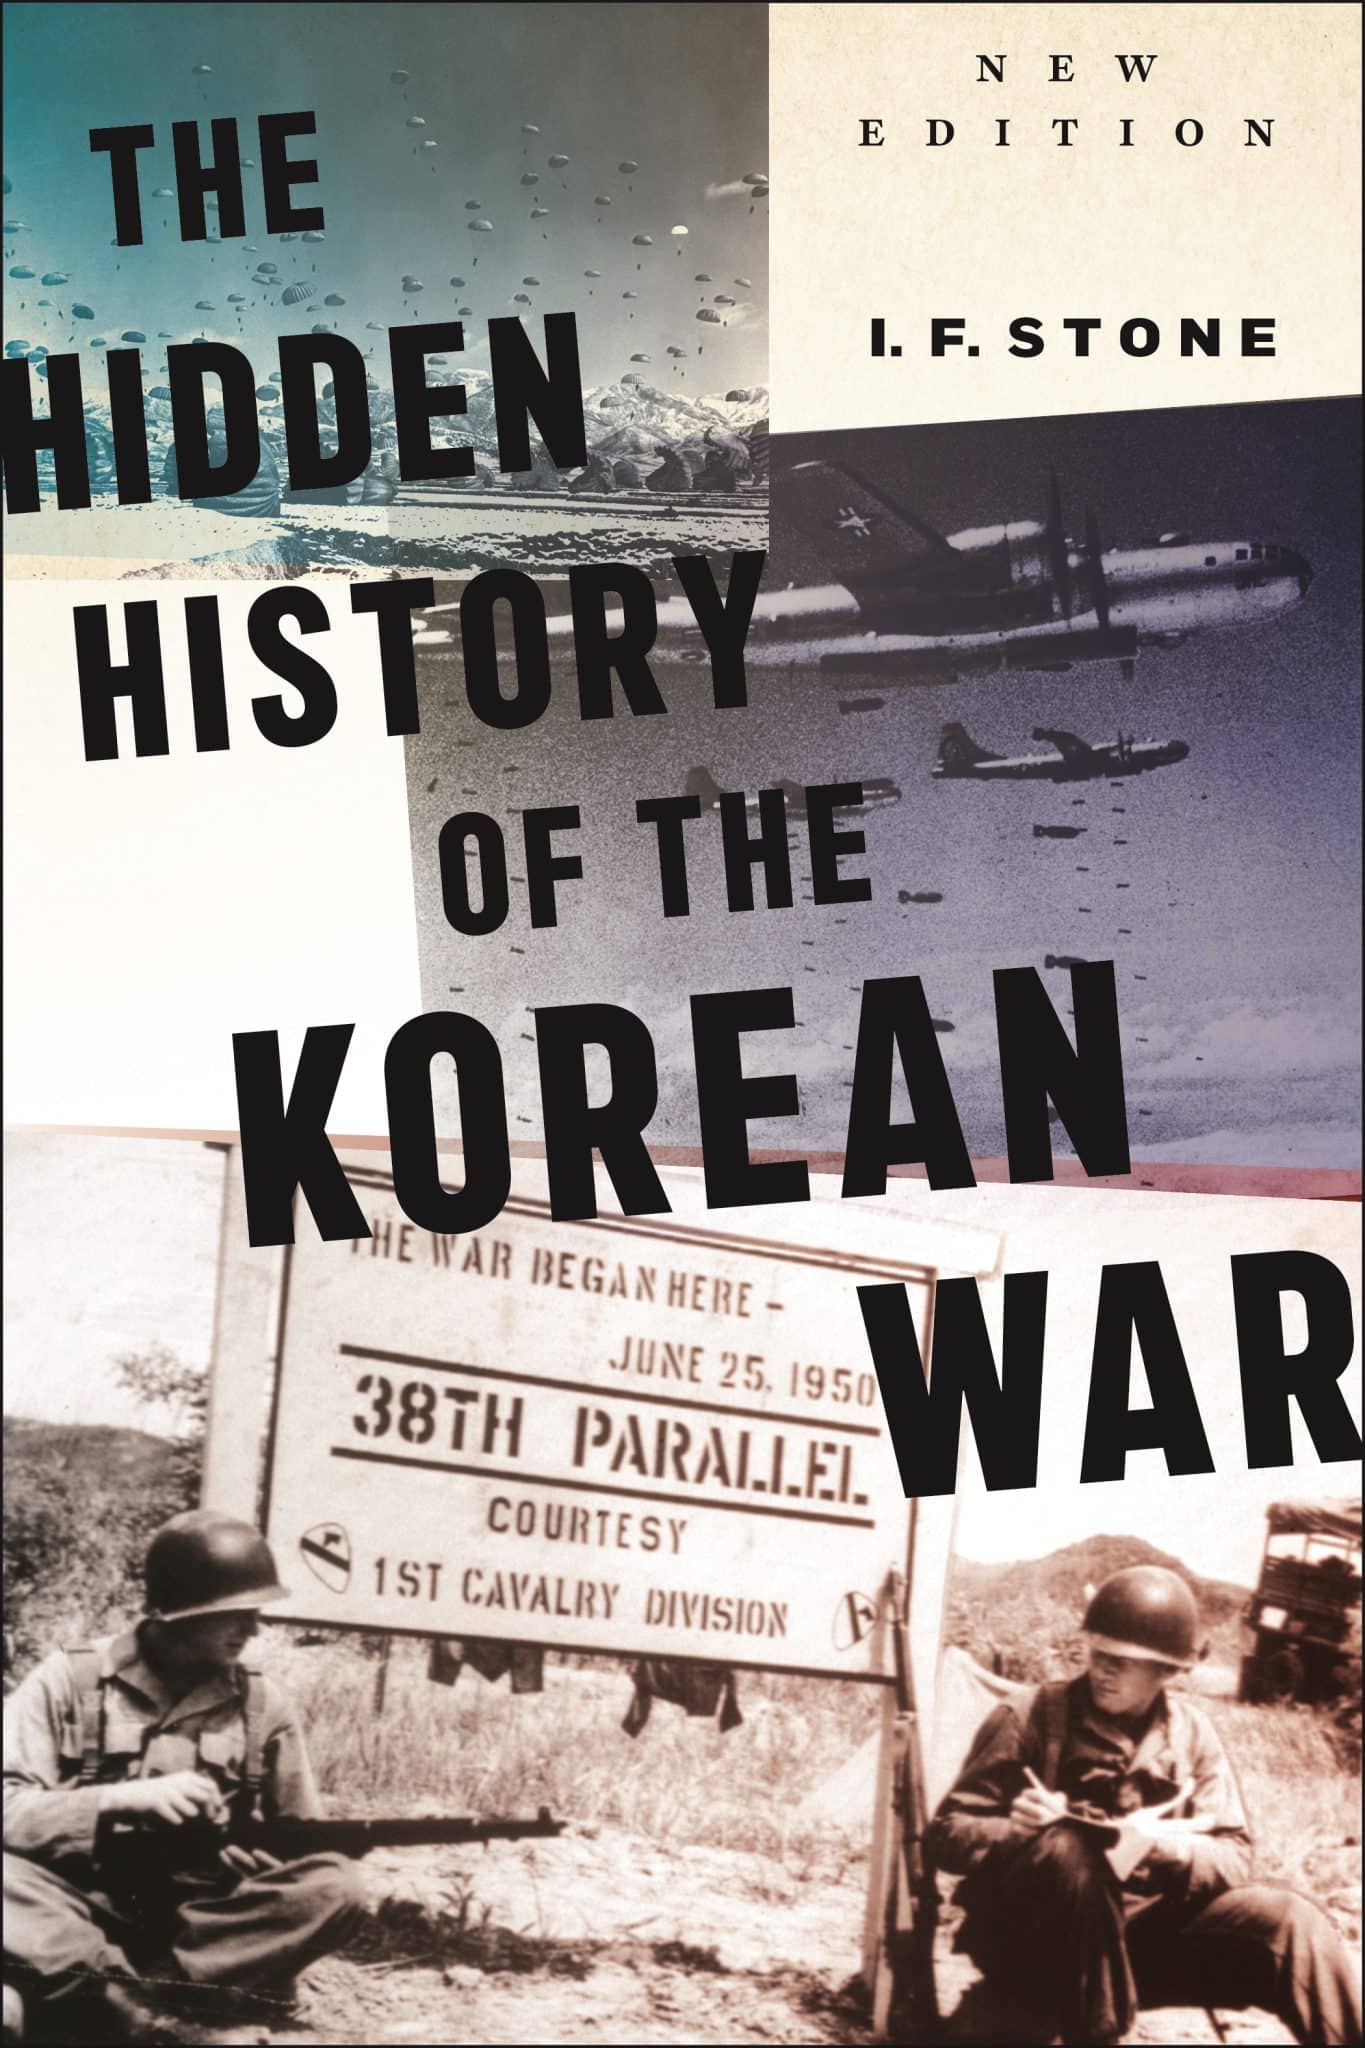 The Hidden History of the Korean War: New Edition